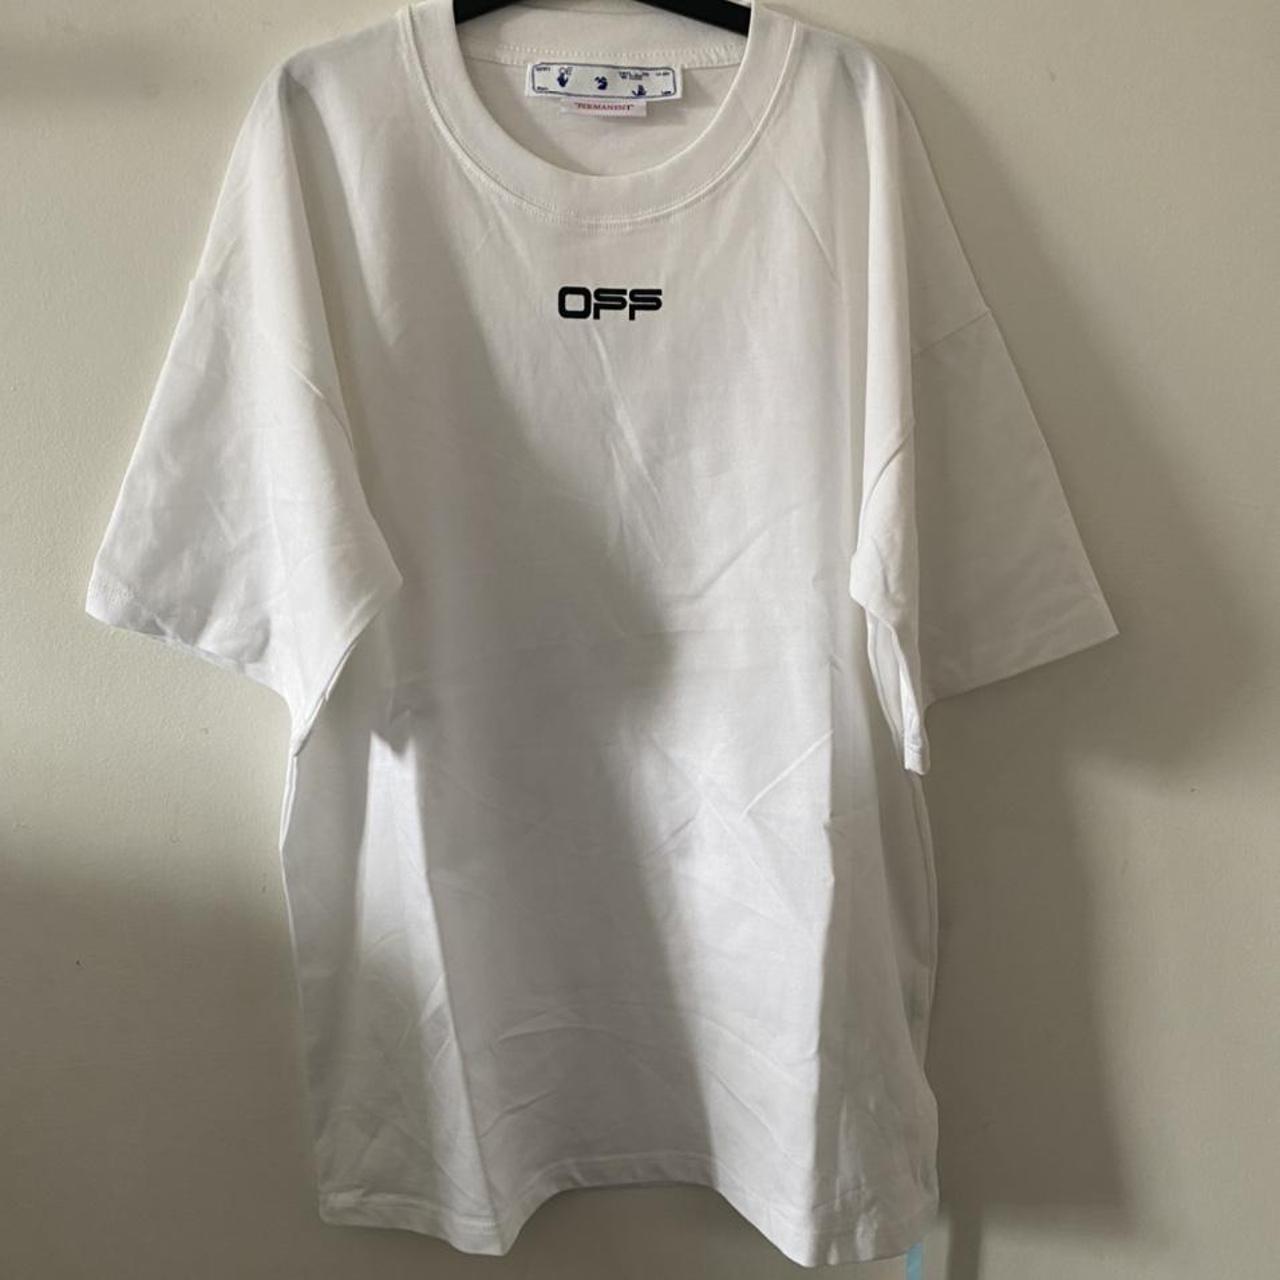 OFF WHITE reflective t shirt - Got it as a gift but... - Depop